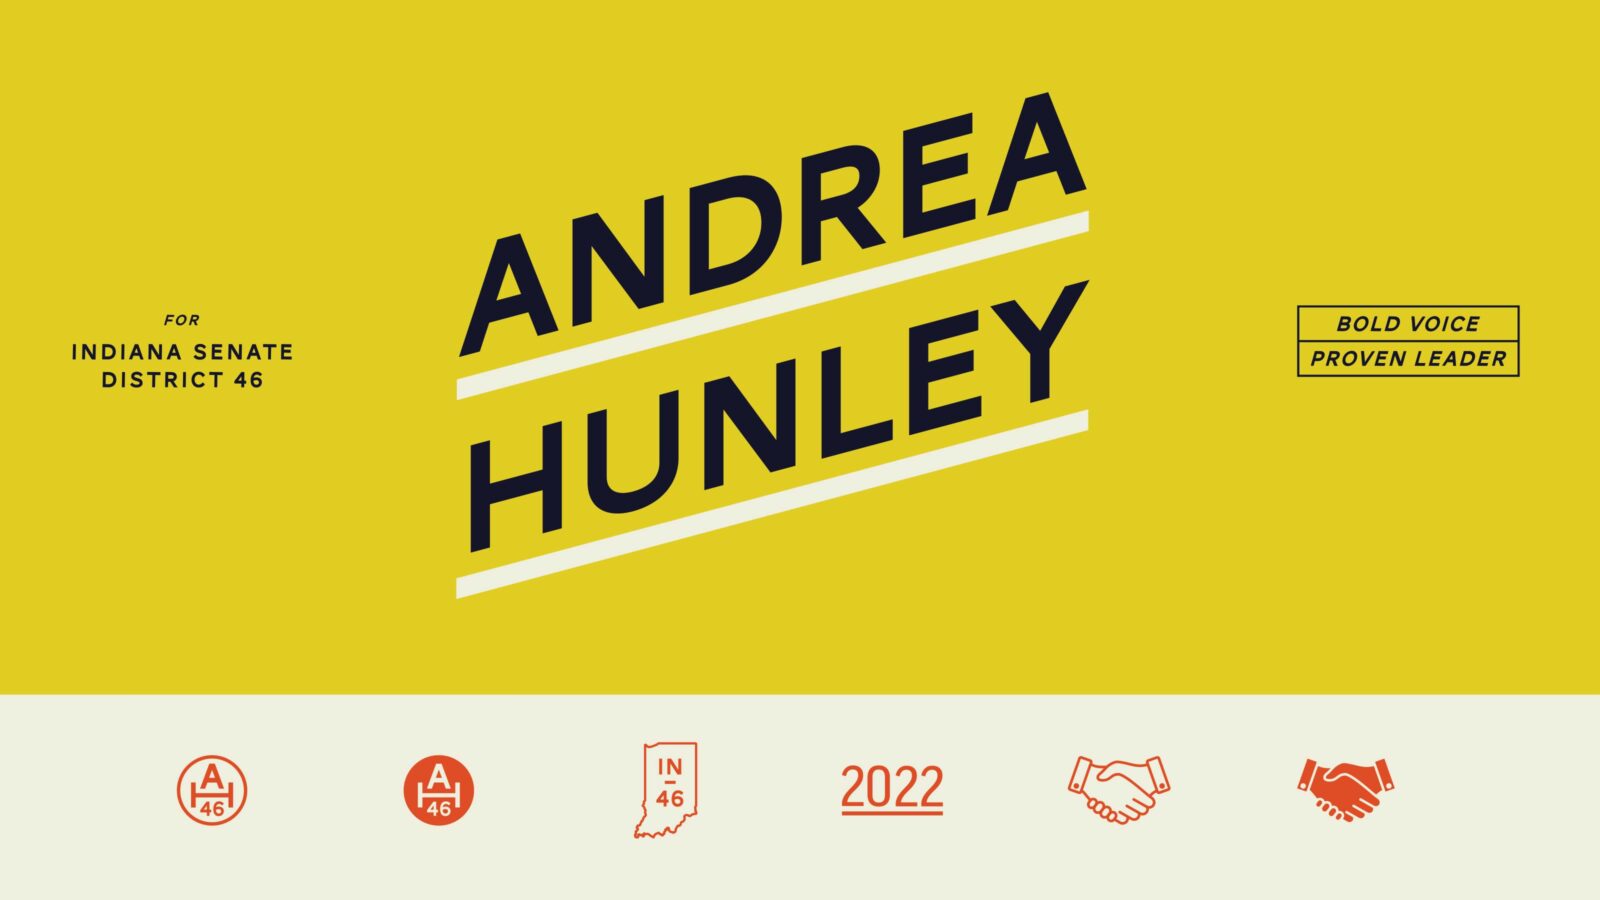 Andrea Hunley Brand Elements